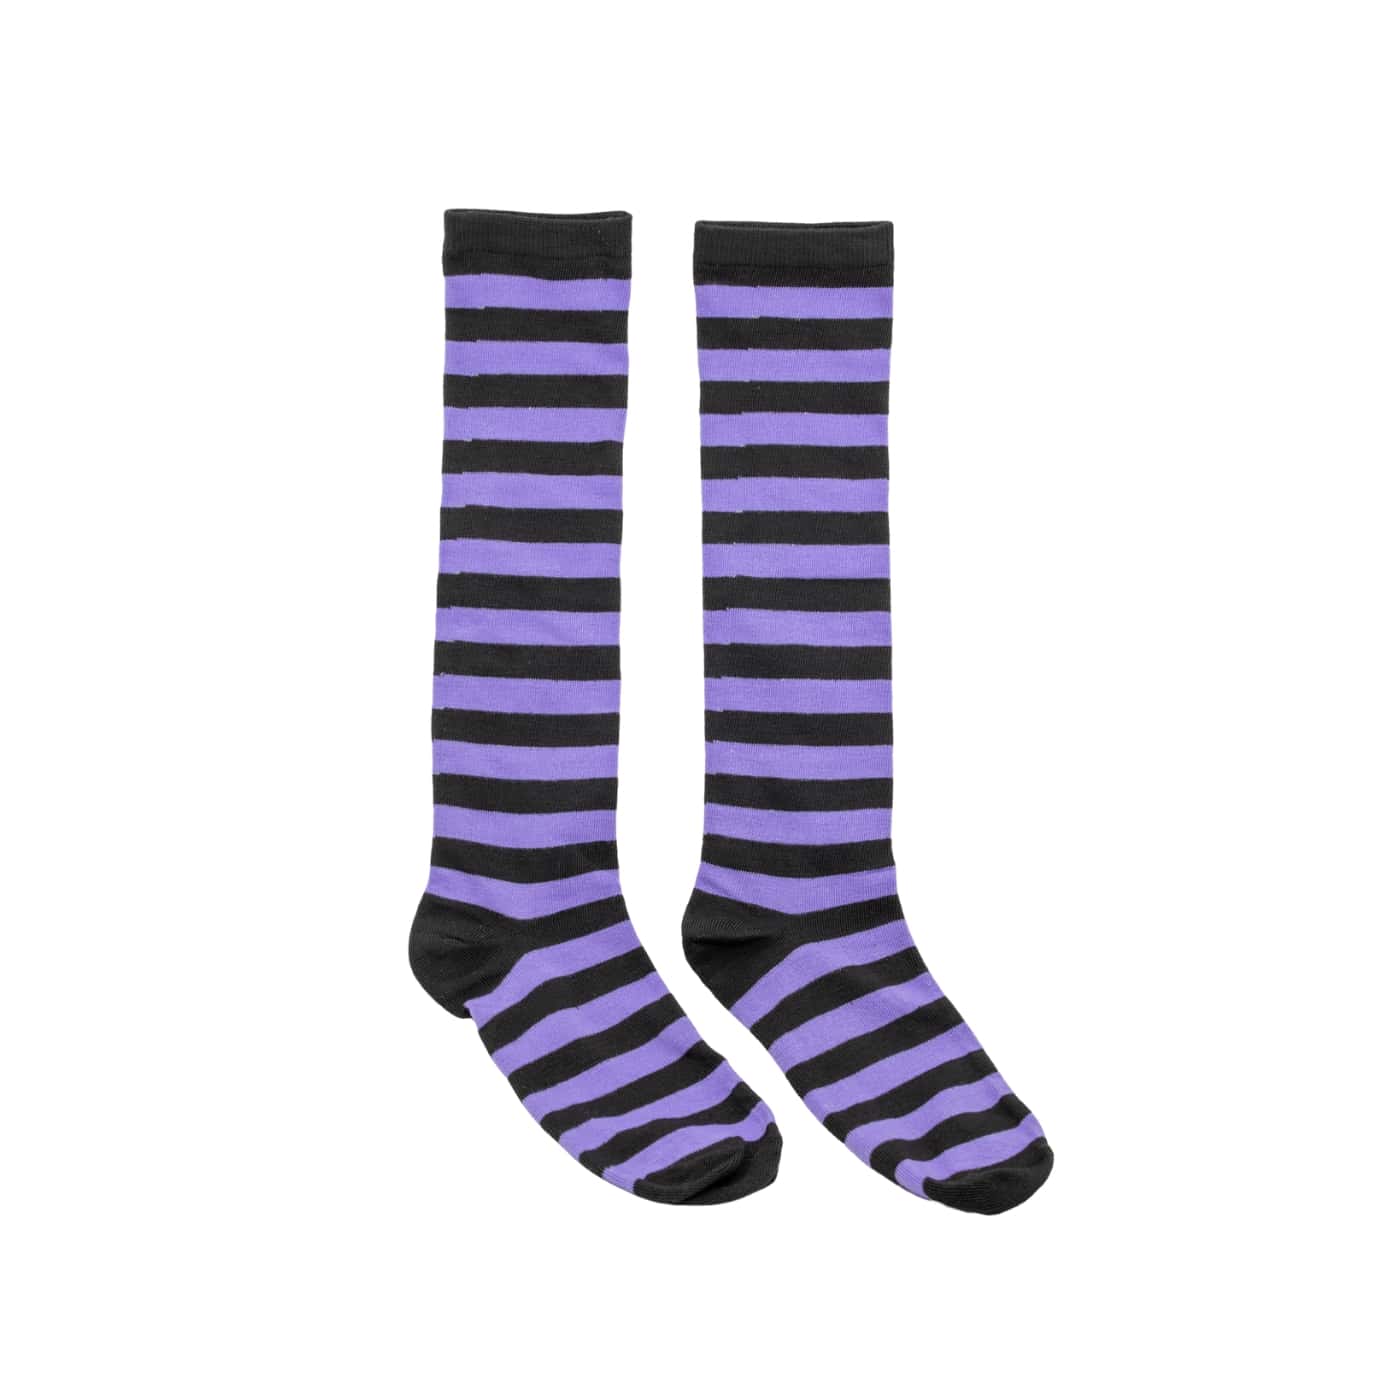 Black & Lilac Stripe Knee High Socks by RainbowsAndFairies.com.au (Stripe Long Socks - Rainbow - Stockings - Colourful Socks - Vintage Inspired) - SKU: FW_SOCKS_STRIPE_B&L - Pic-02